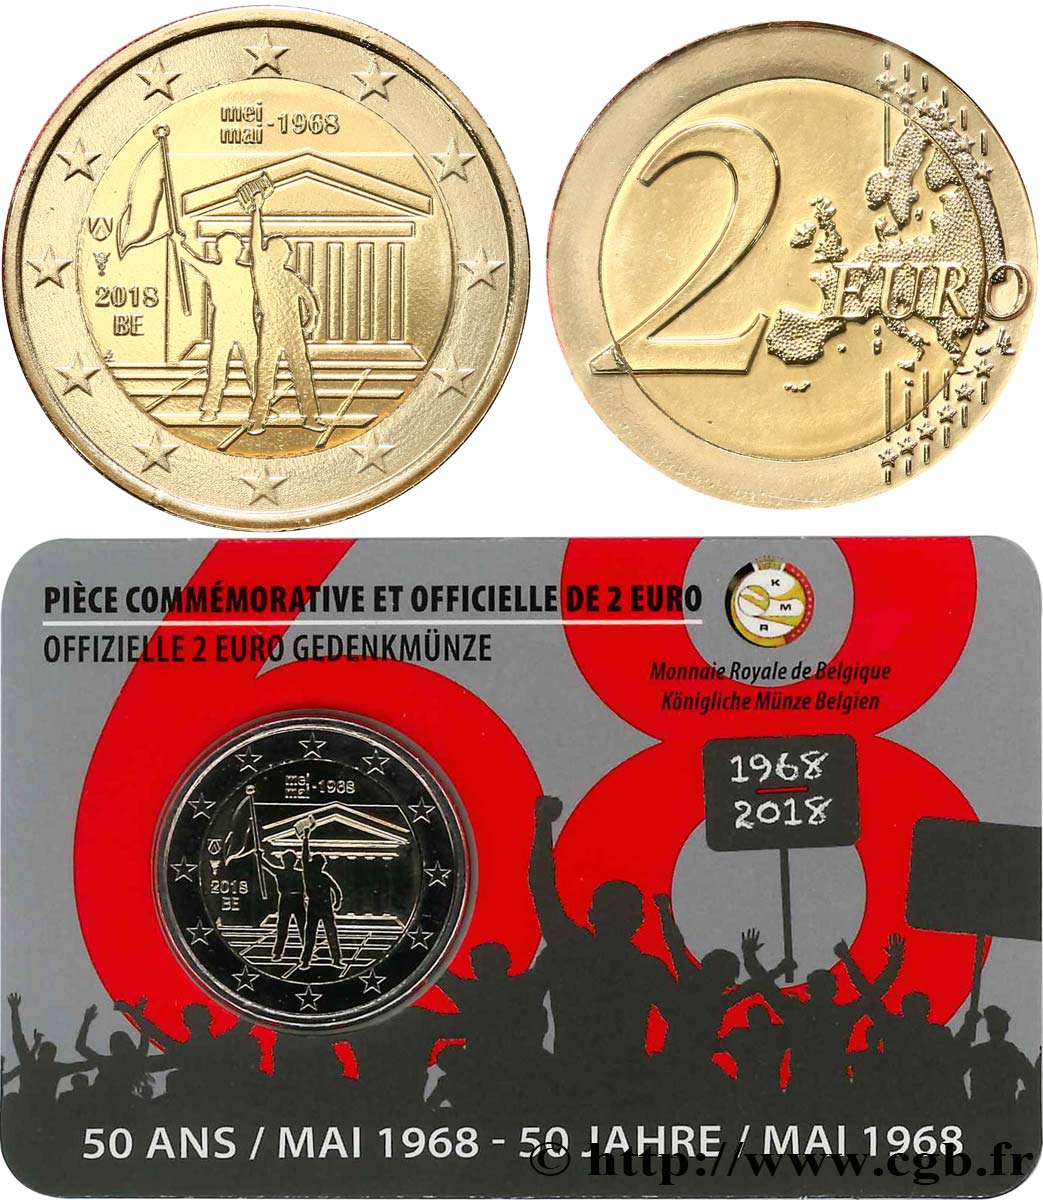 BÉLGICA Coin-card 2 Euro 50 ANS MAI 1968 - Version française 2018 FDC